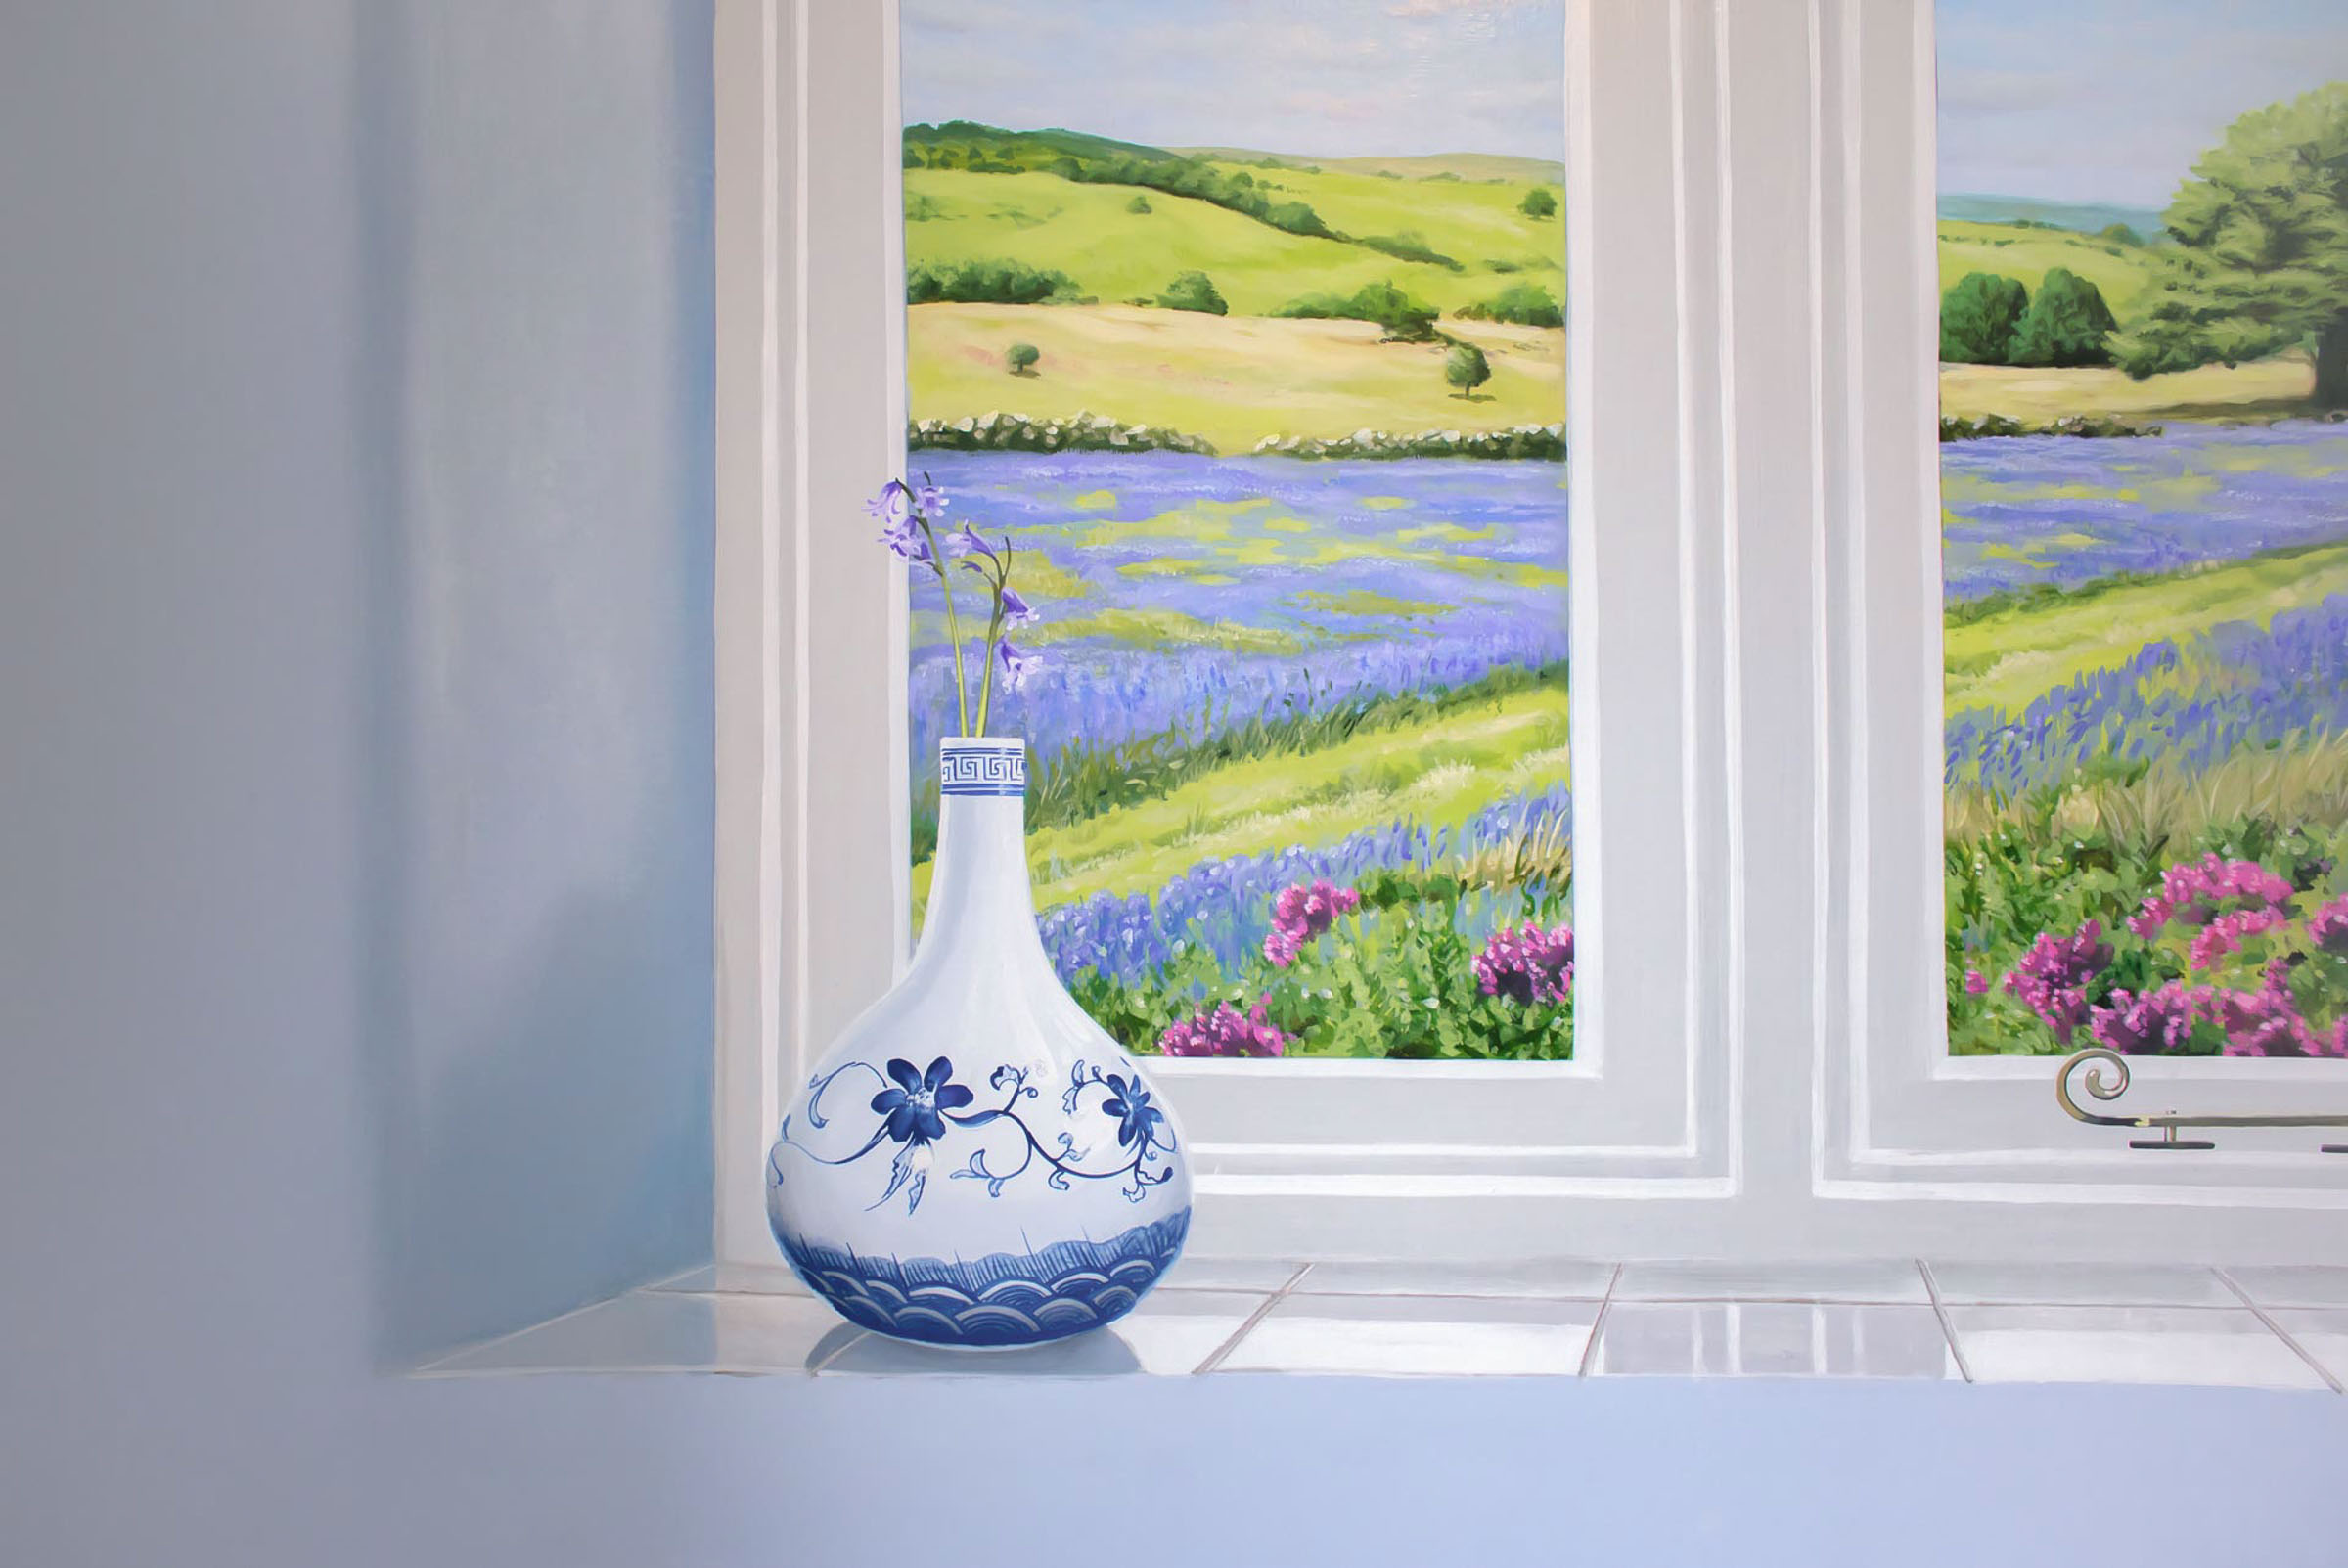 Window and vase detail trompe l'oeil